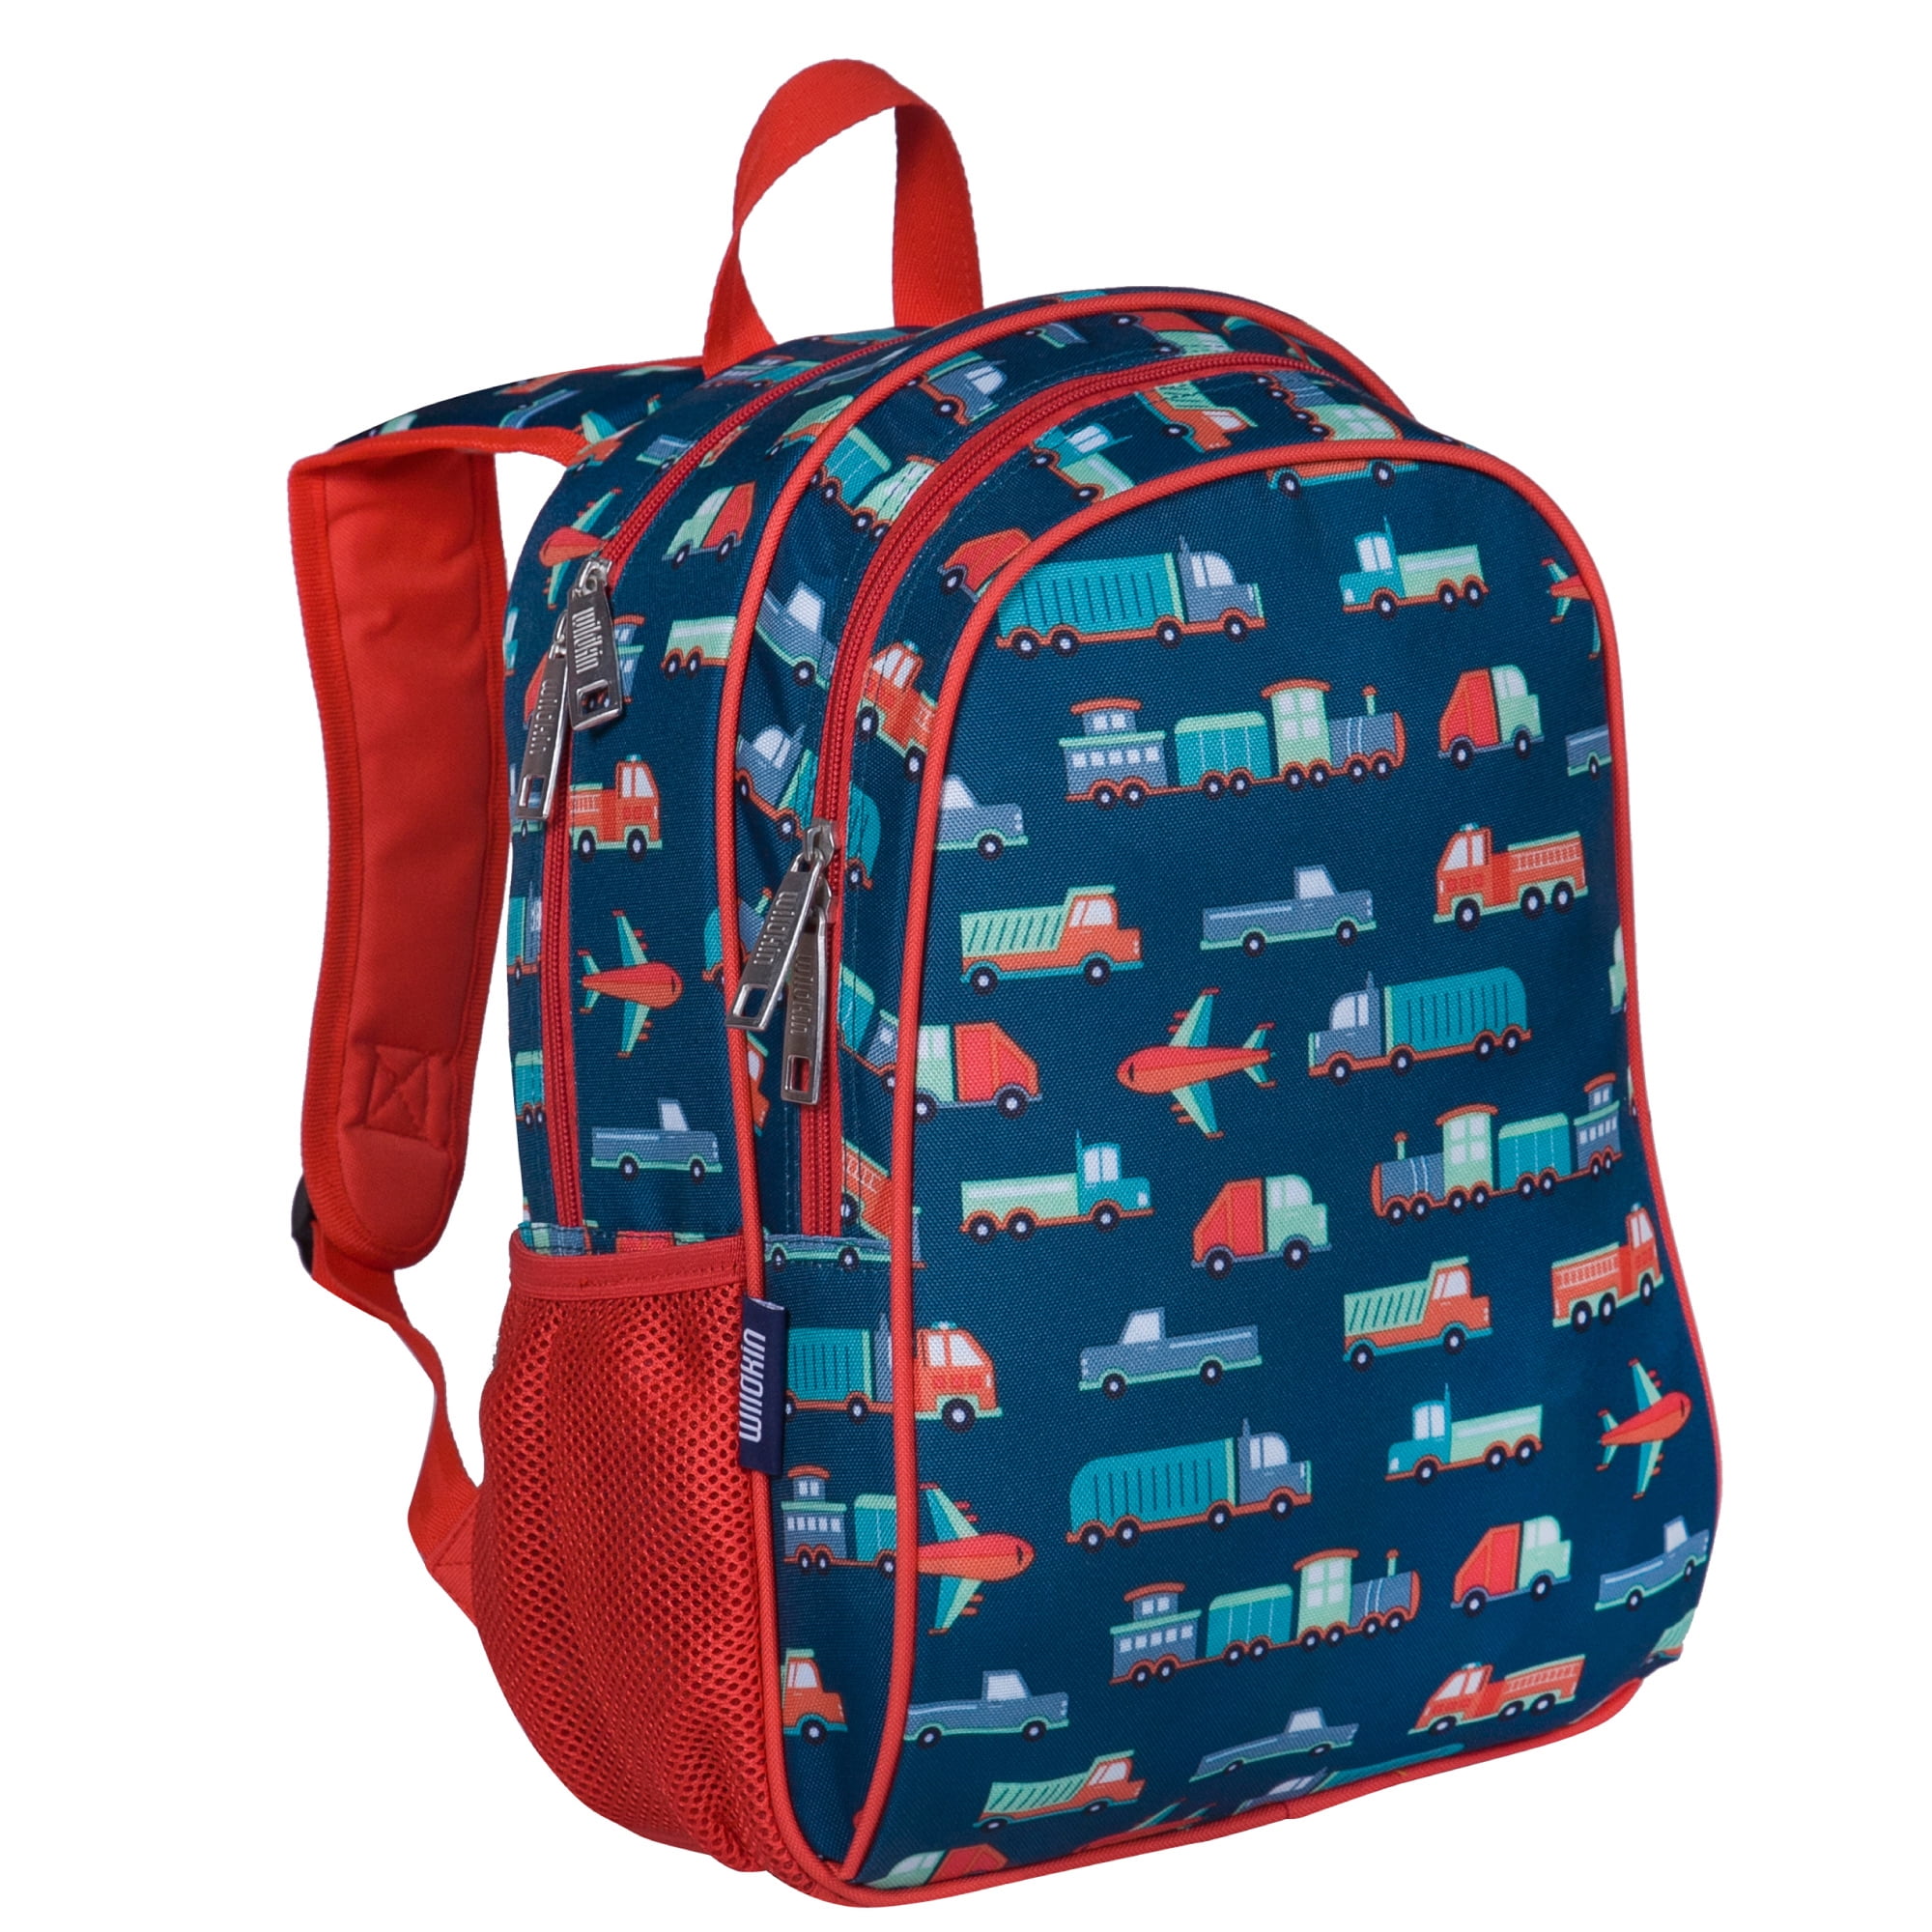 Wildkin 15-Inch Kids Backpack Elementary School Travel (Jurassic Dinosaurs  Blue)